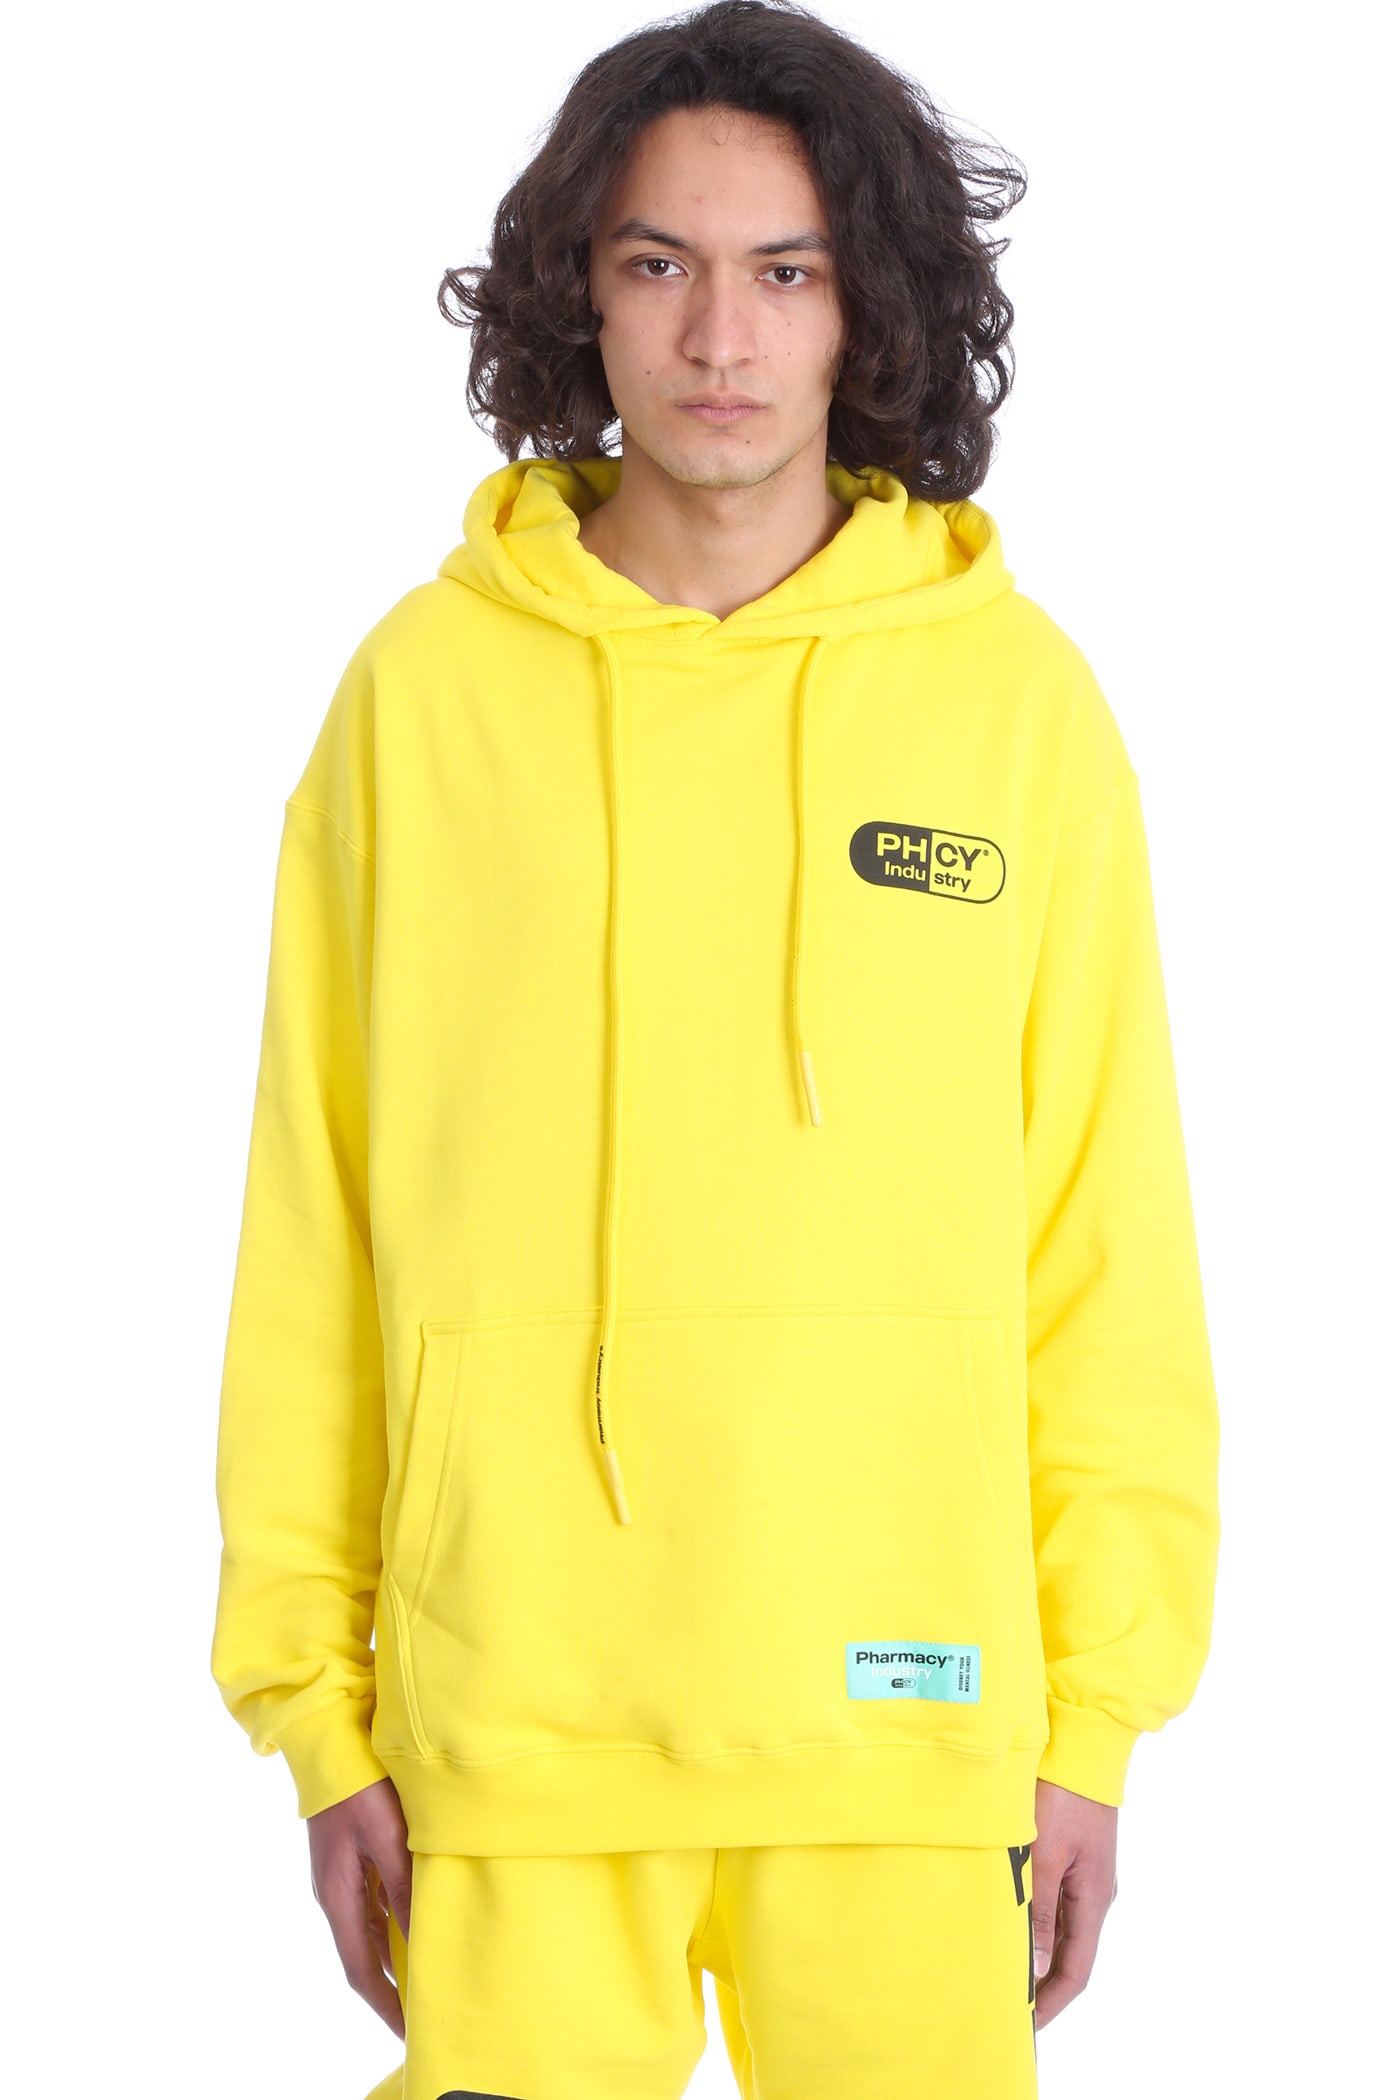 Pharmacy Industry Sweatshirt In Yellow Cotton